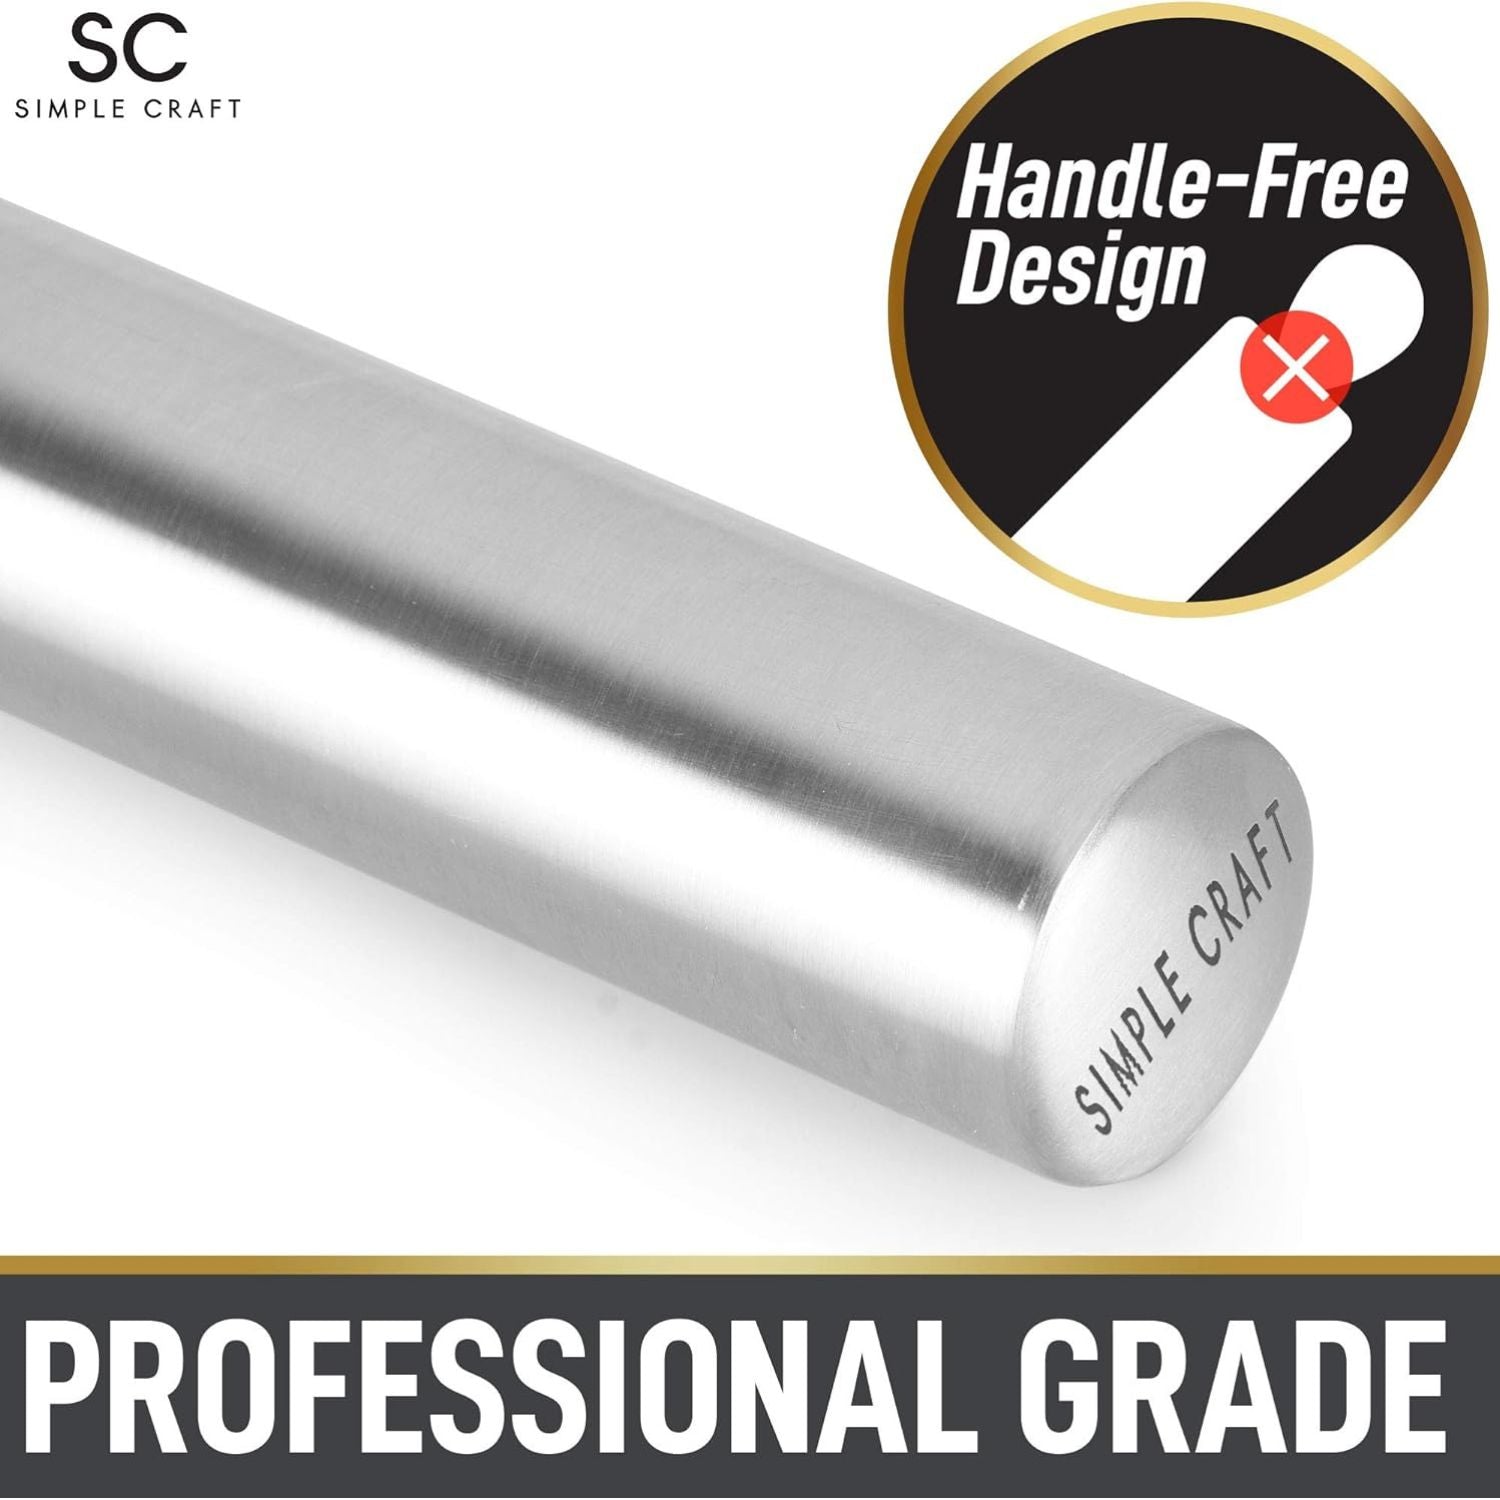 Professional grade Simple Craft Premium 16” Rolling Pin